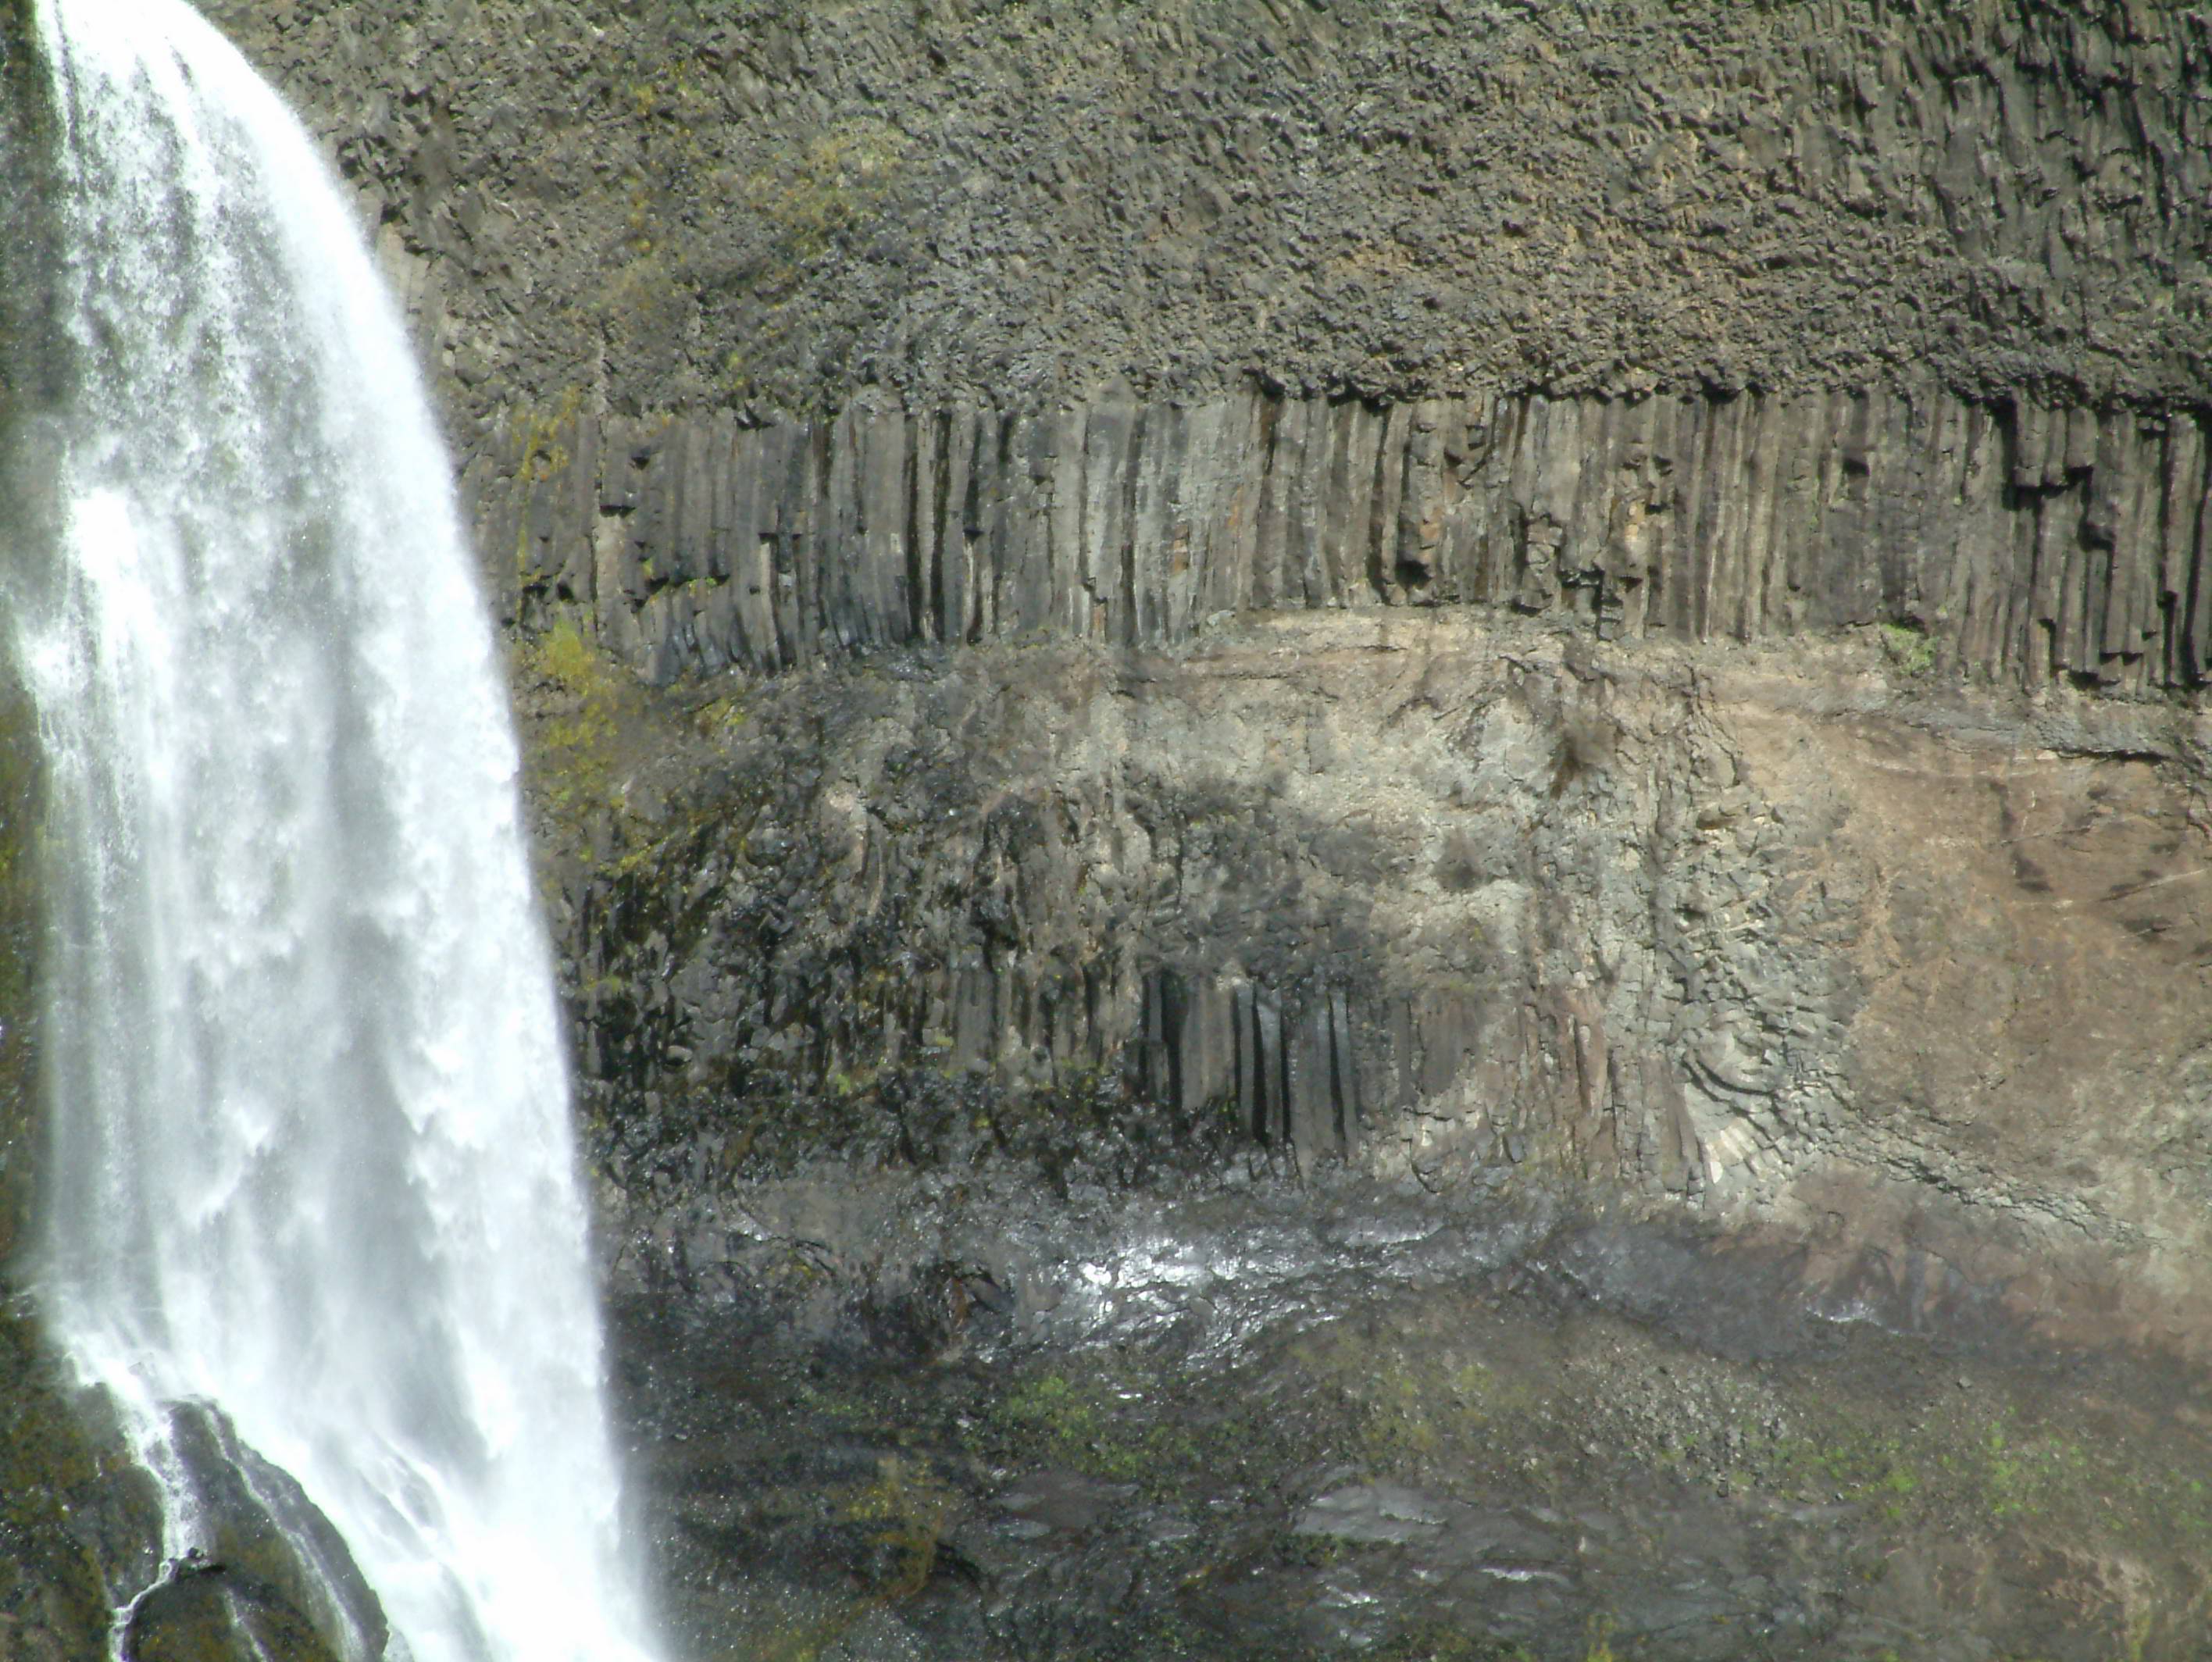 Columnar basalt formations by Granni